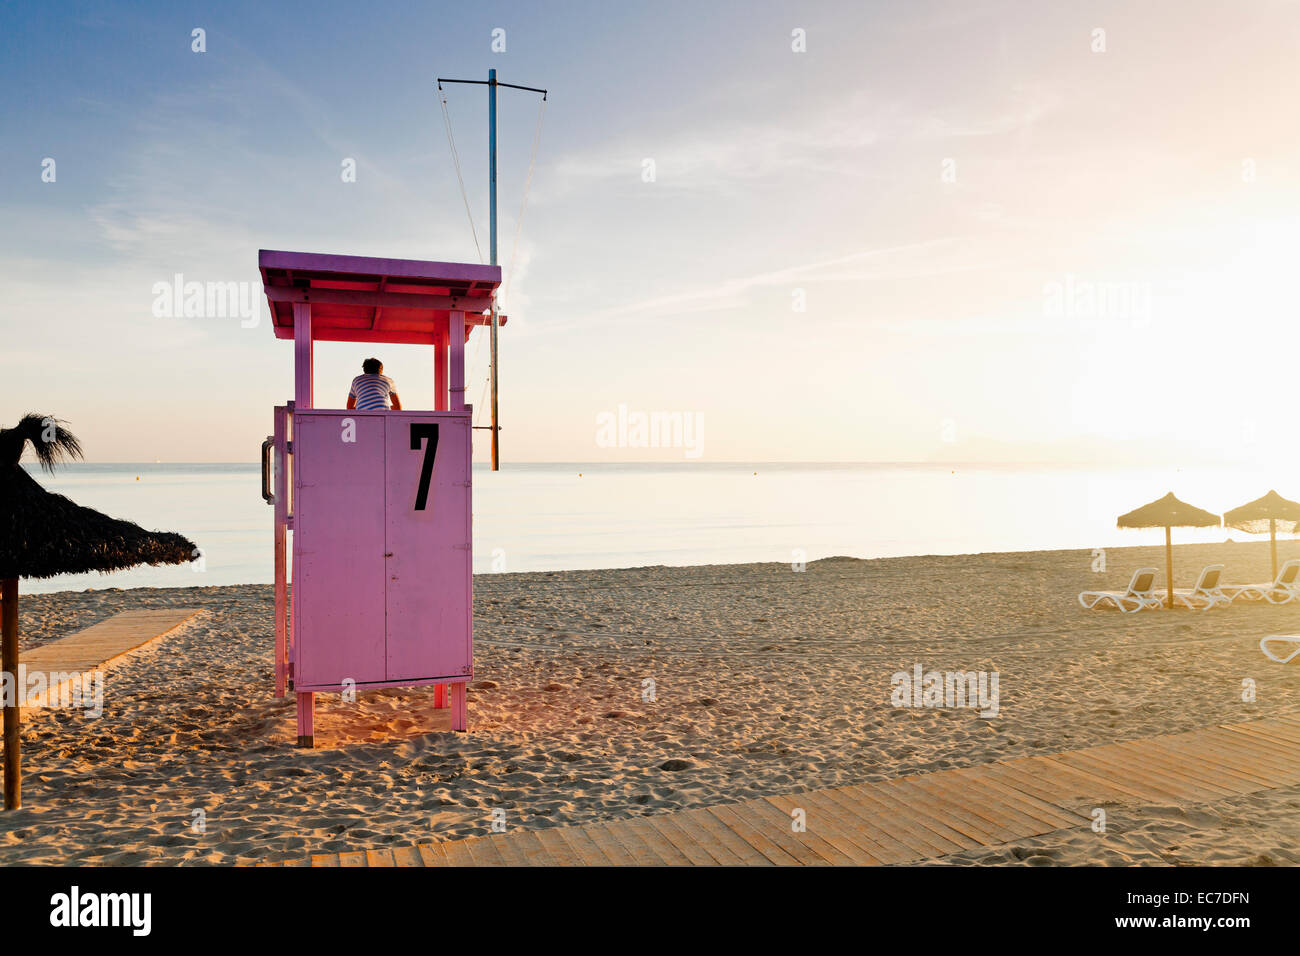 Spain, Balearic Islands, Majorca, one teenage boy standing on a lifeguard stand watching the sea Stock Photo